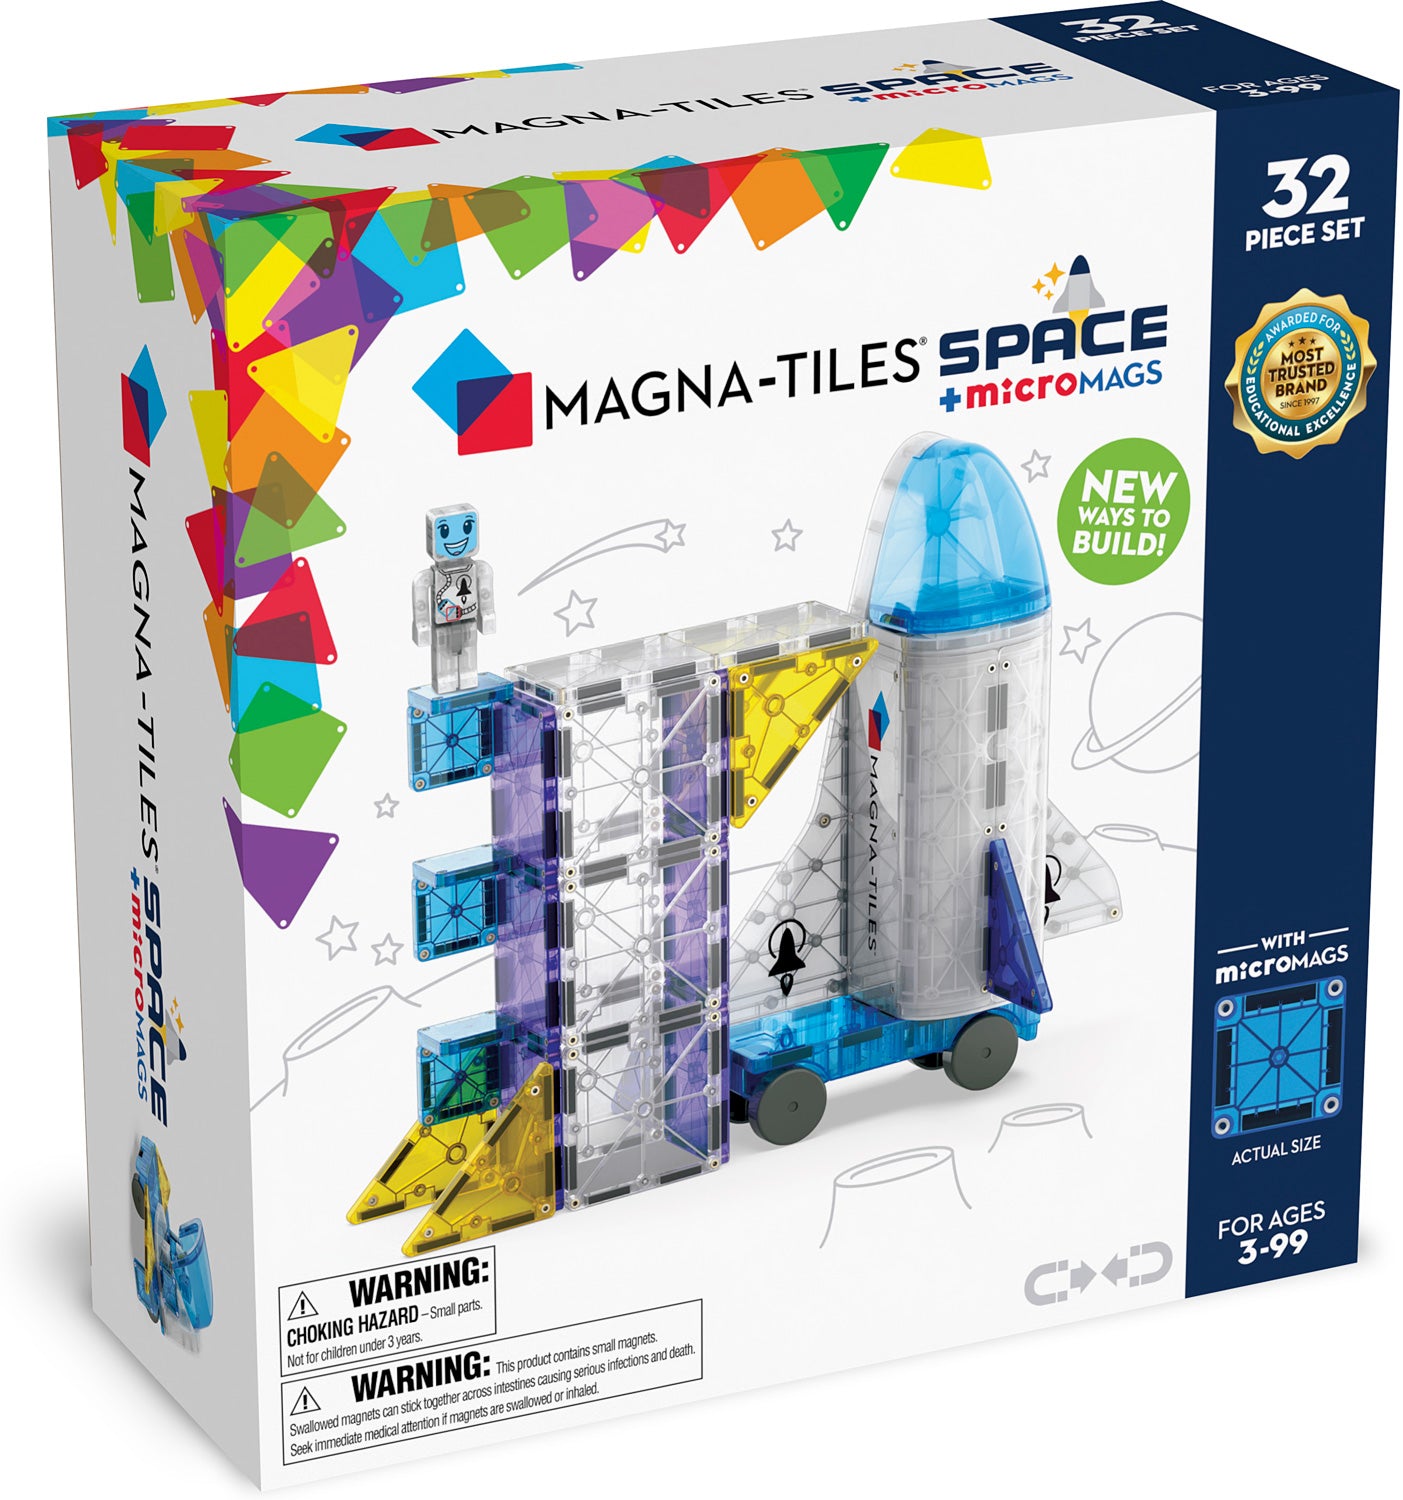 Magna-Tiles Space + MicroMAGS 32 Piece Set